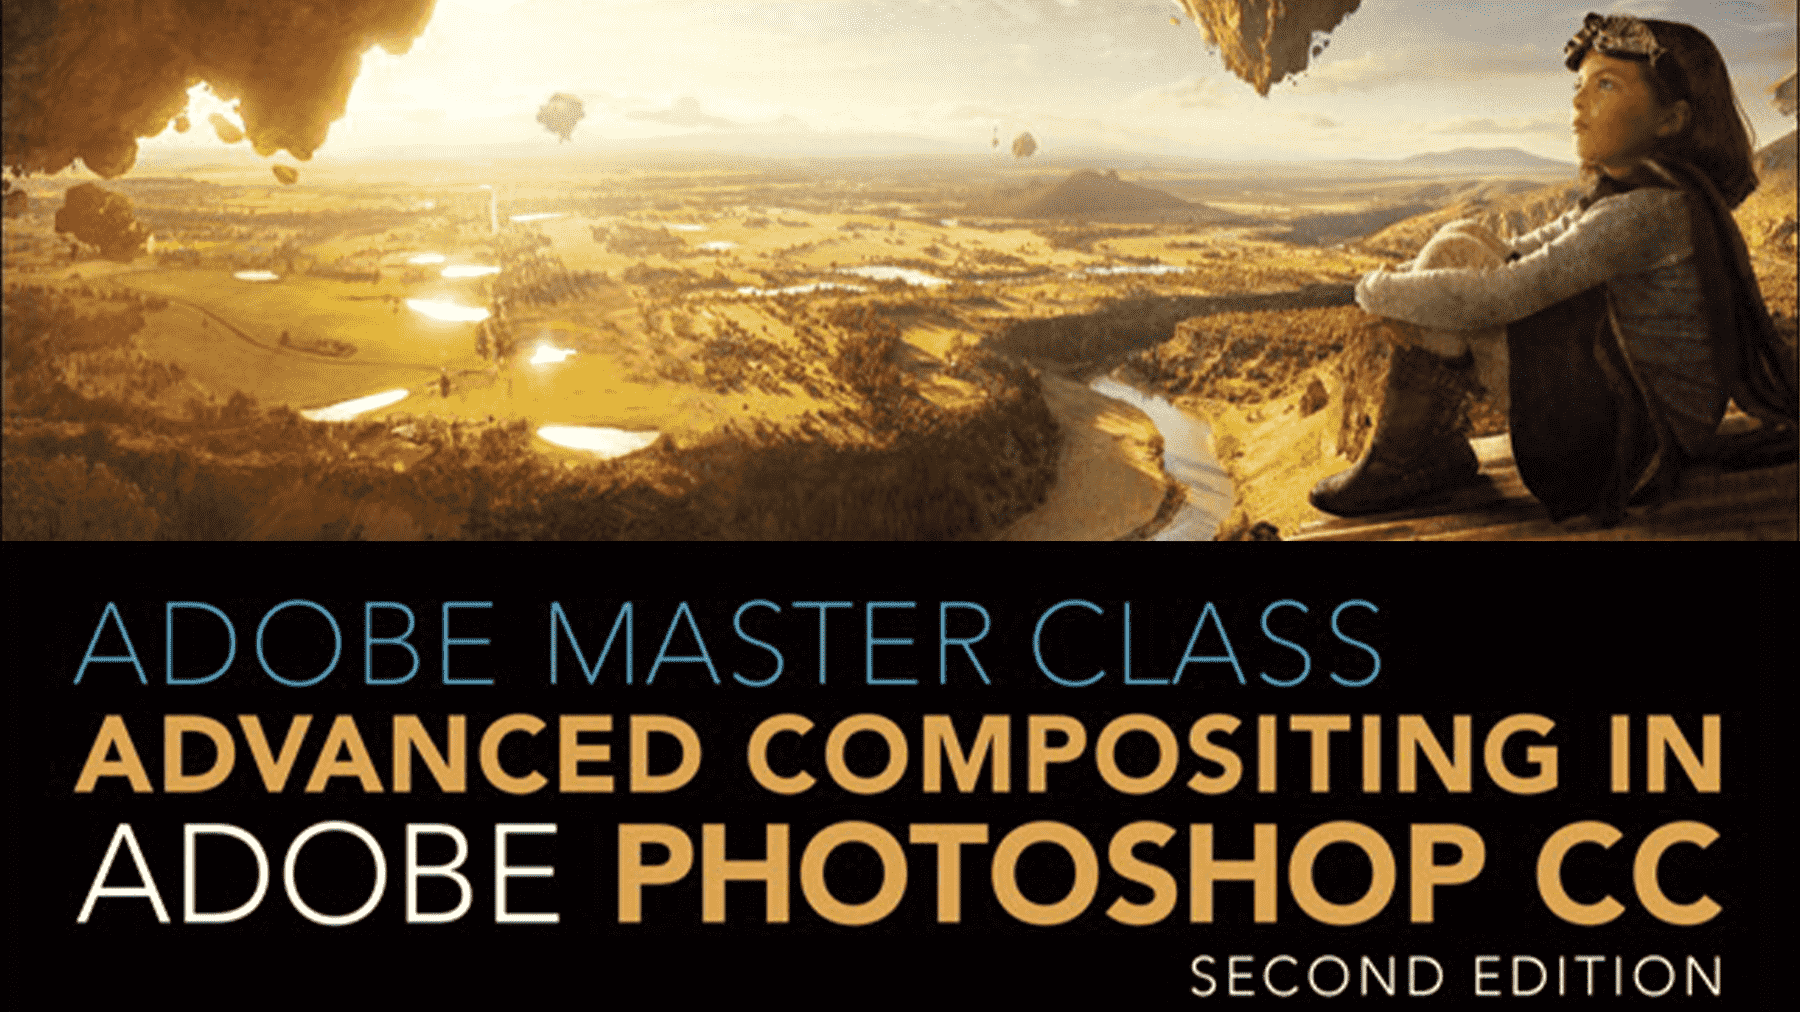 Adobe Master Class Advanced Compositing Ebook Free Download 2021 min